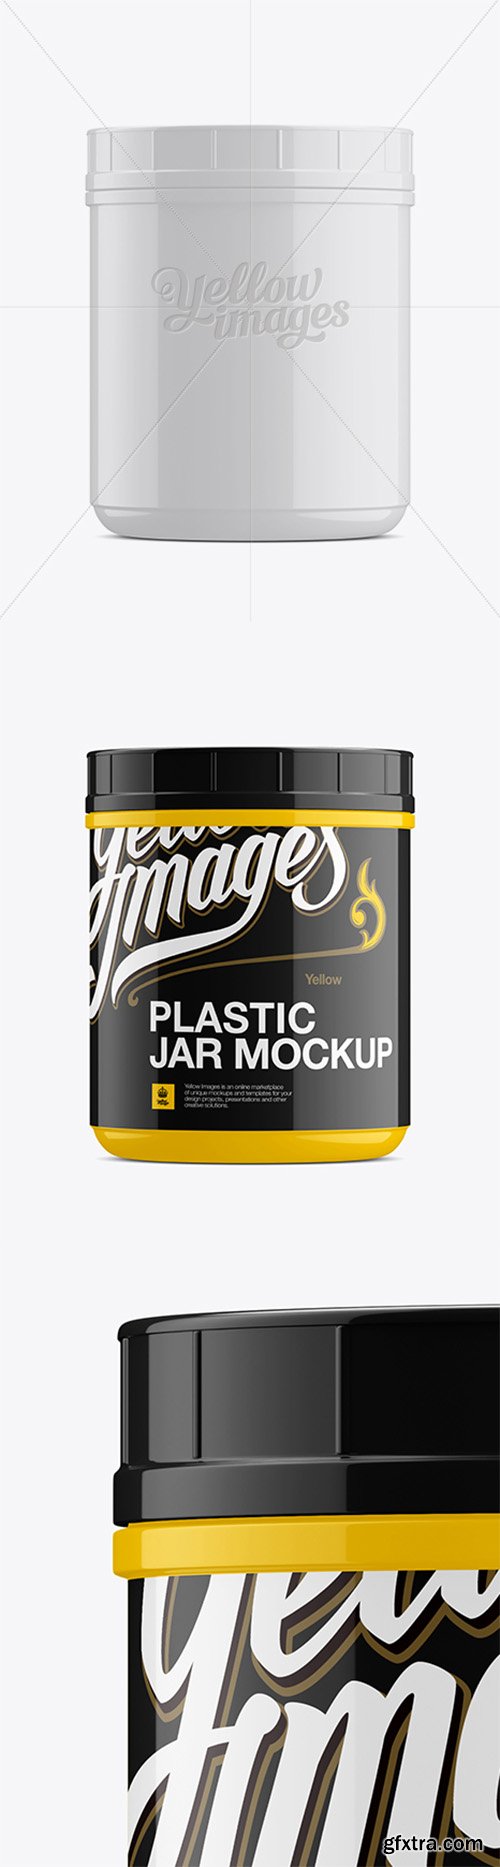 Glossy Plastic Jar Mockup - Front View 14146